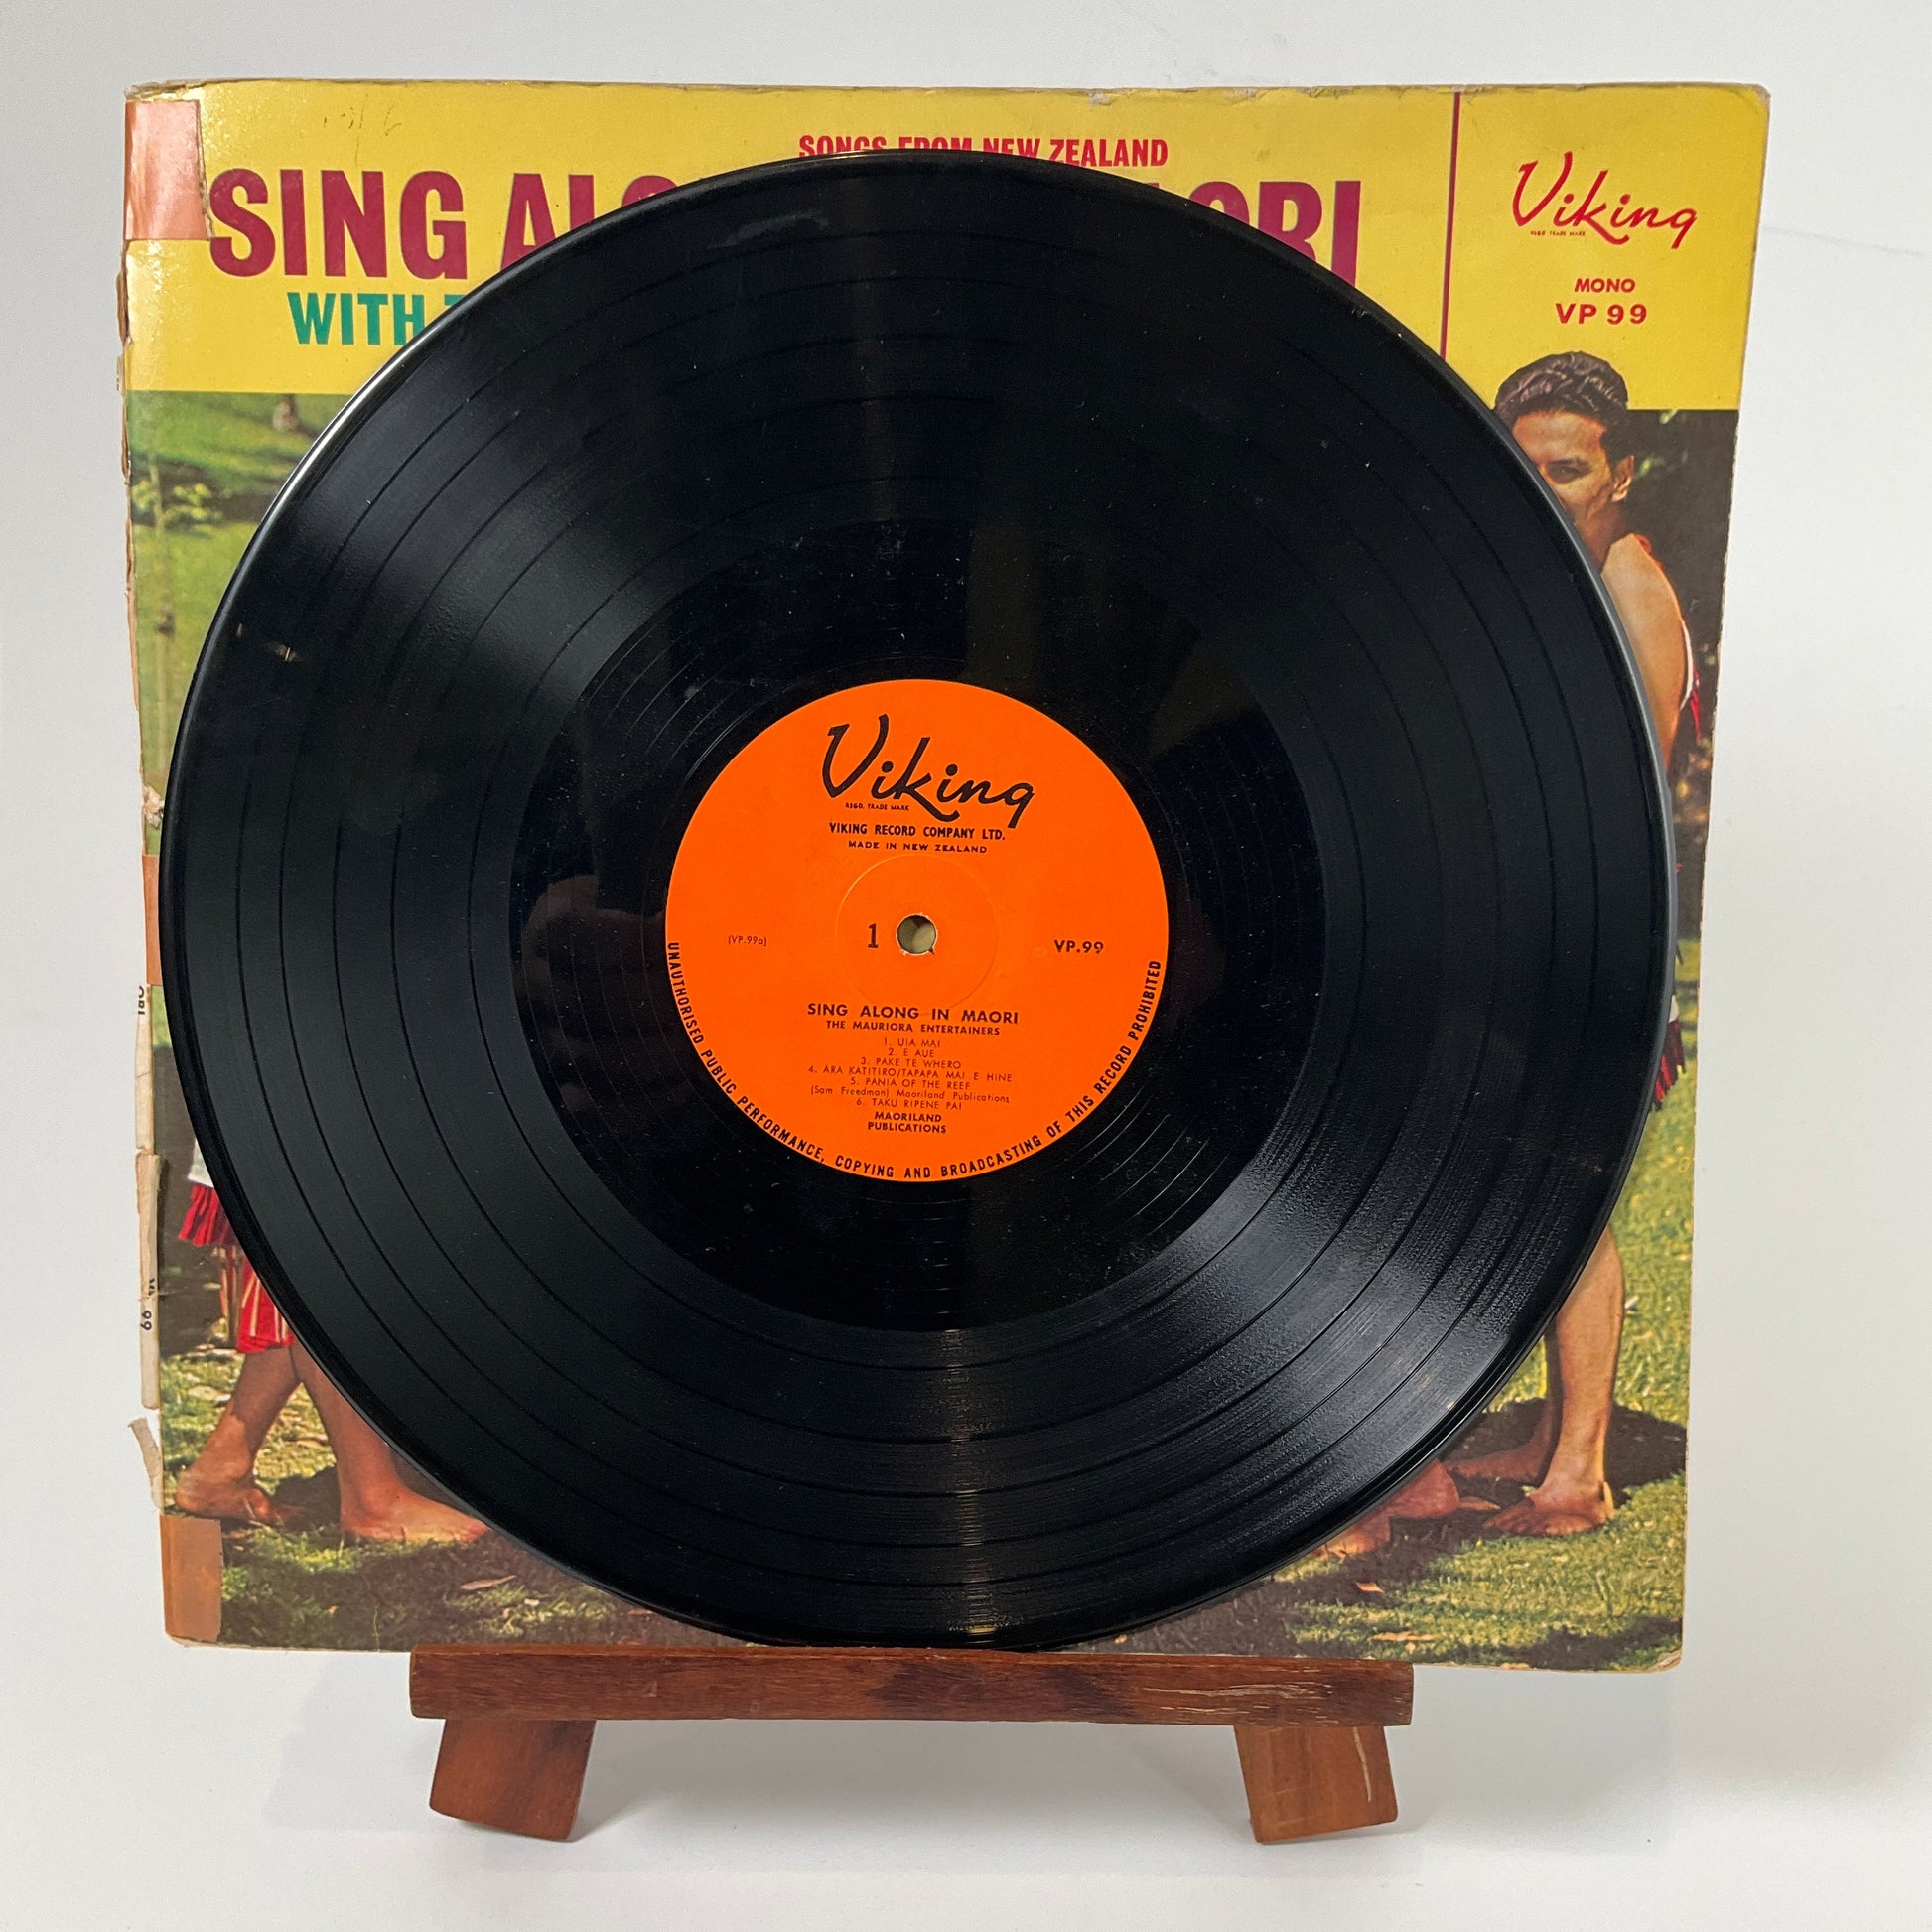 Viking - Sing Along In Maori Records & Lps